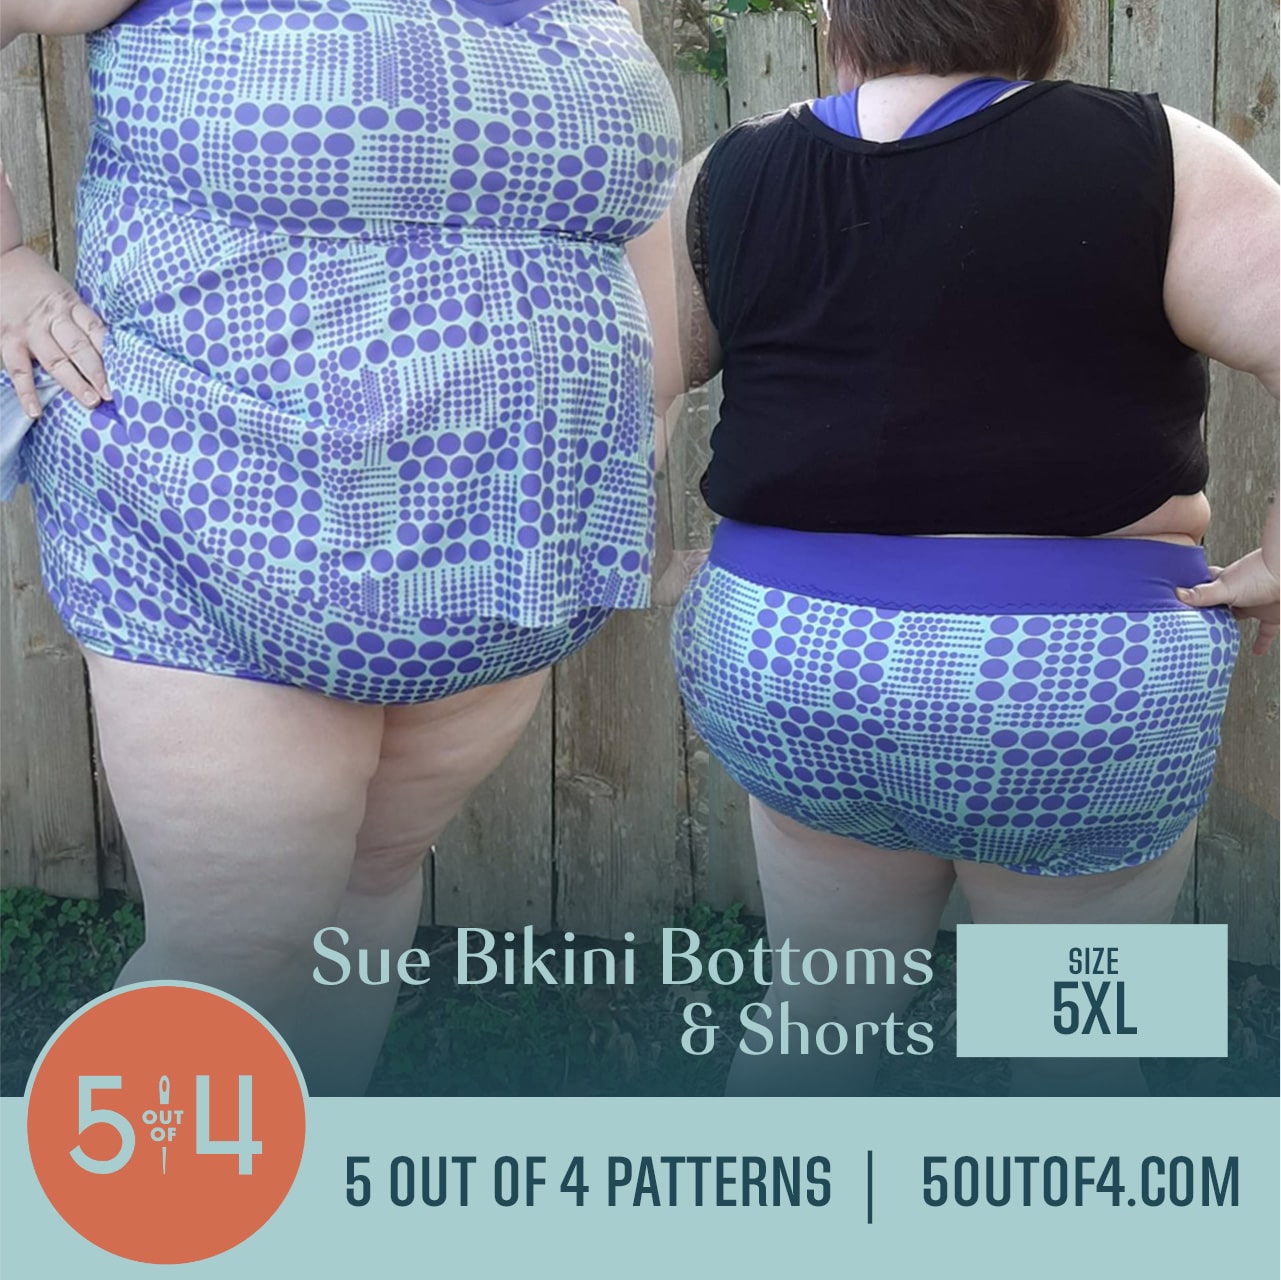 Peggy Bikini, Crop, and Tankini - 5 out of 4 Patterns